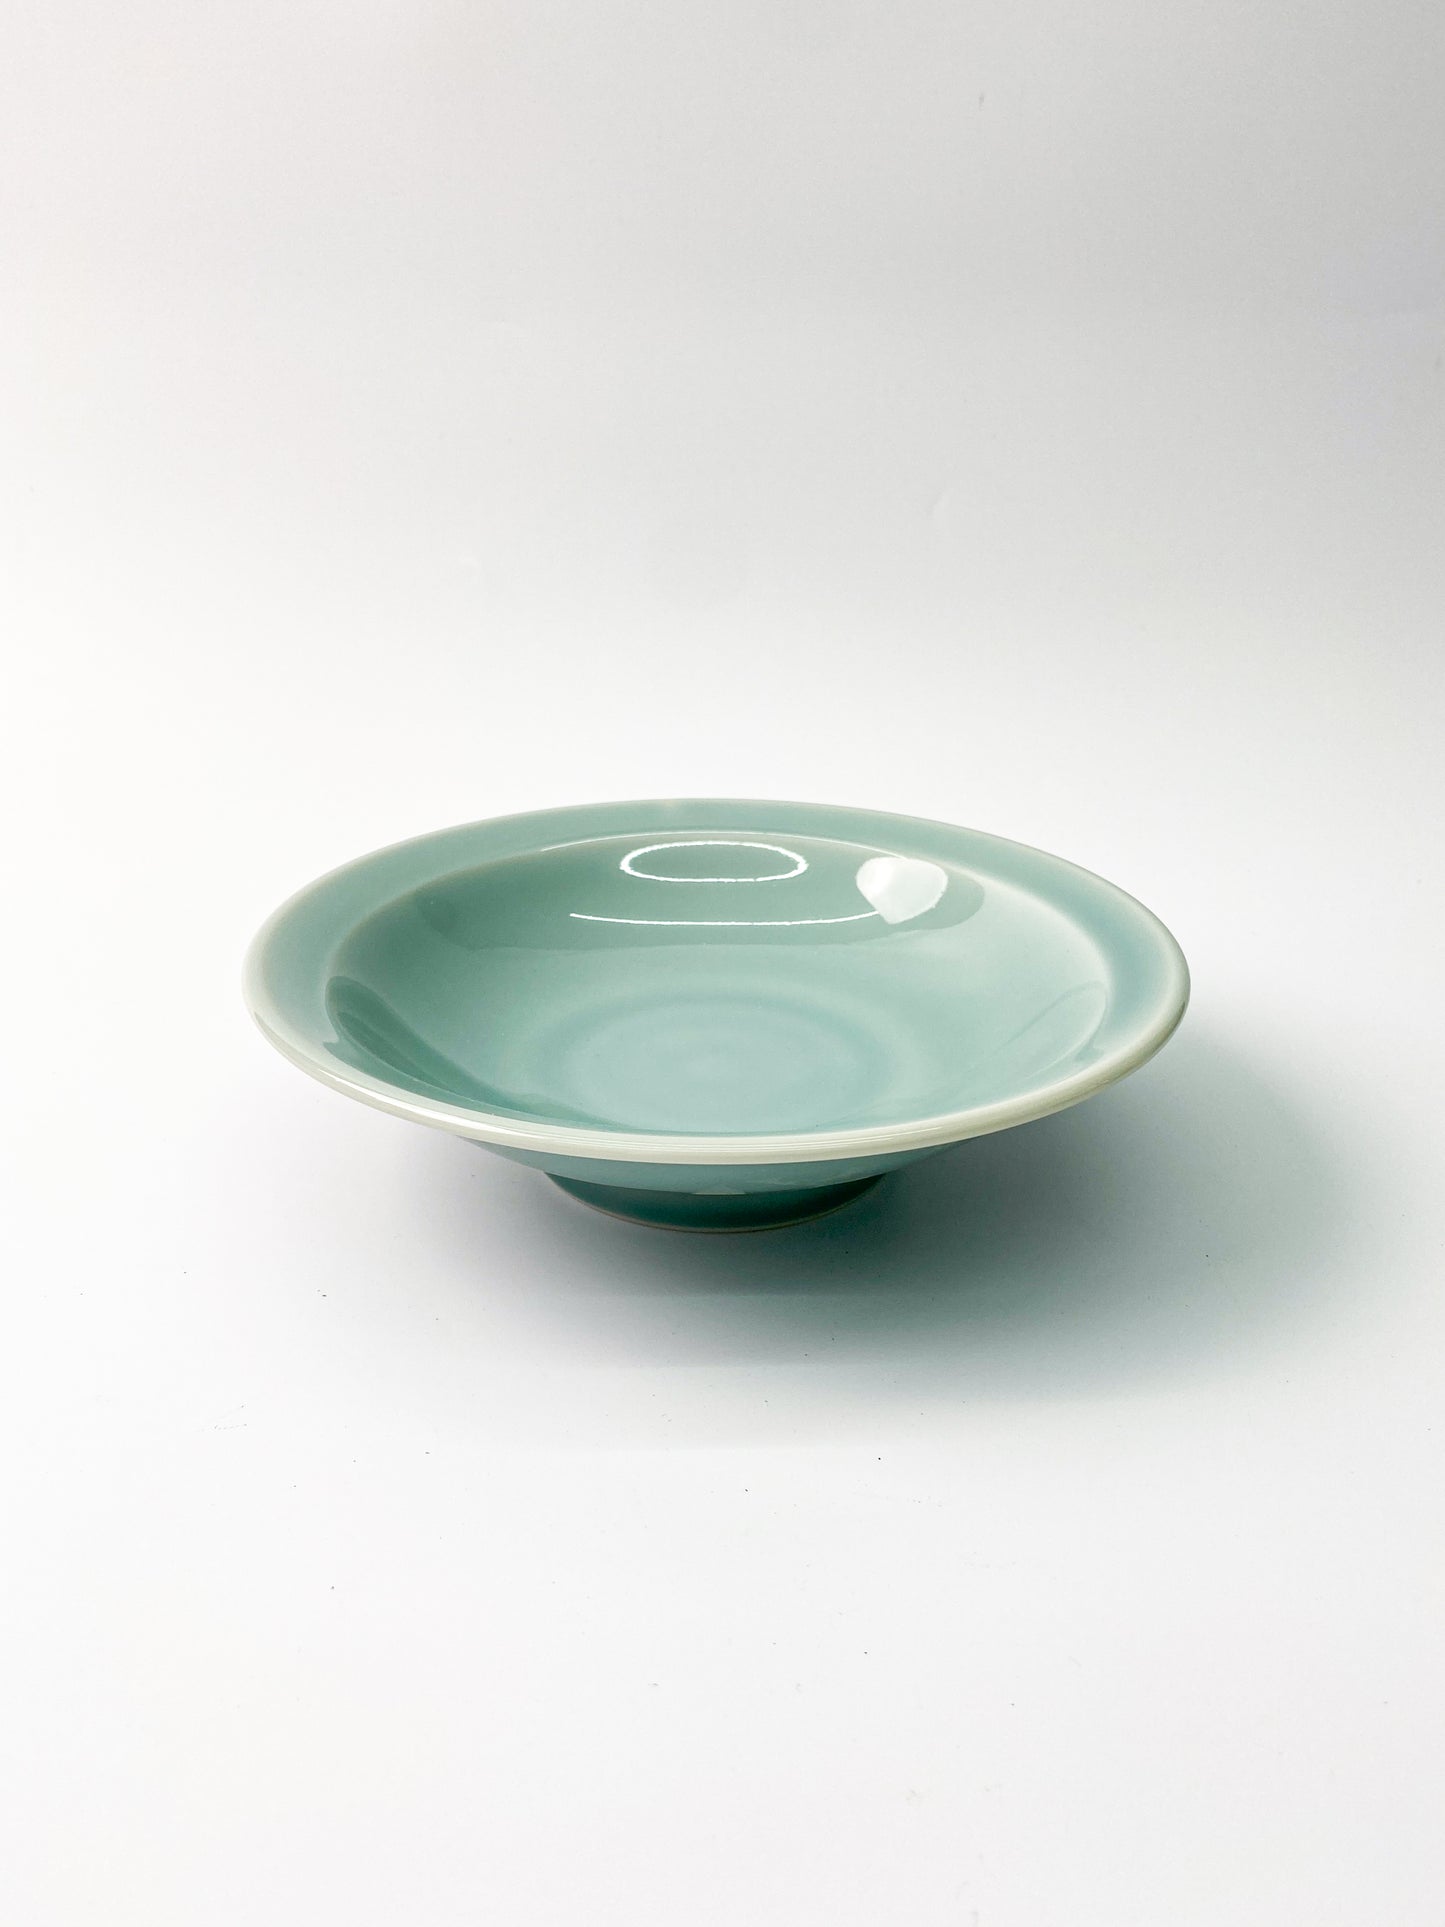 日本製美濃燒 青瓷盤 | Japanese Mino Ware Celadon Ground Plate